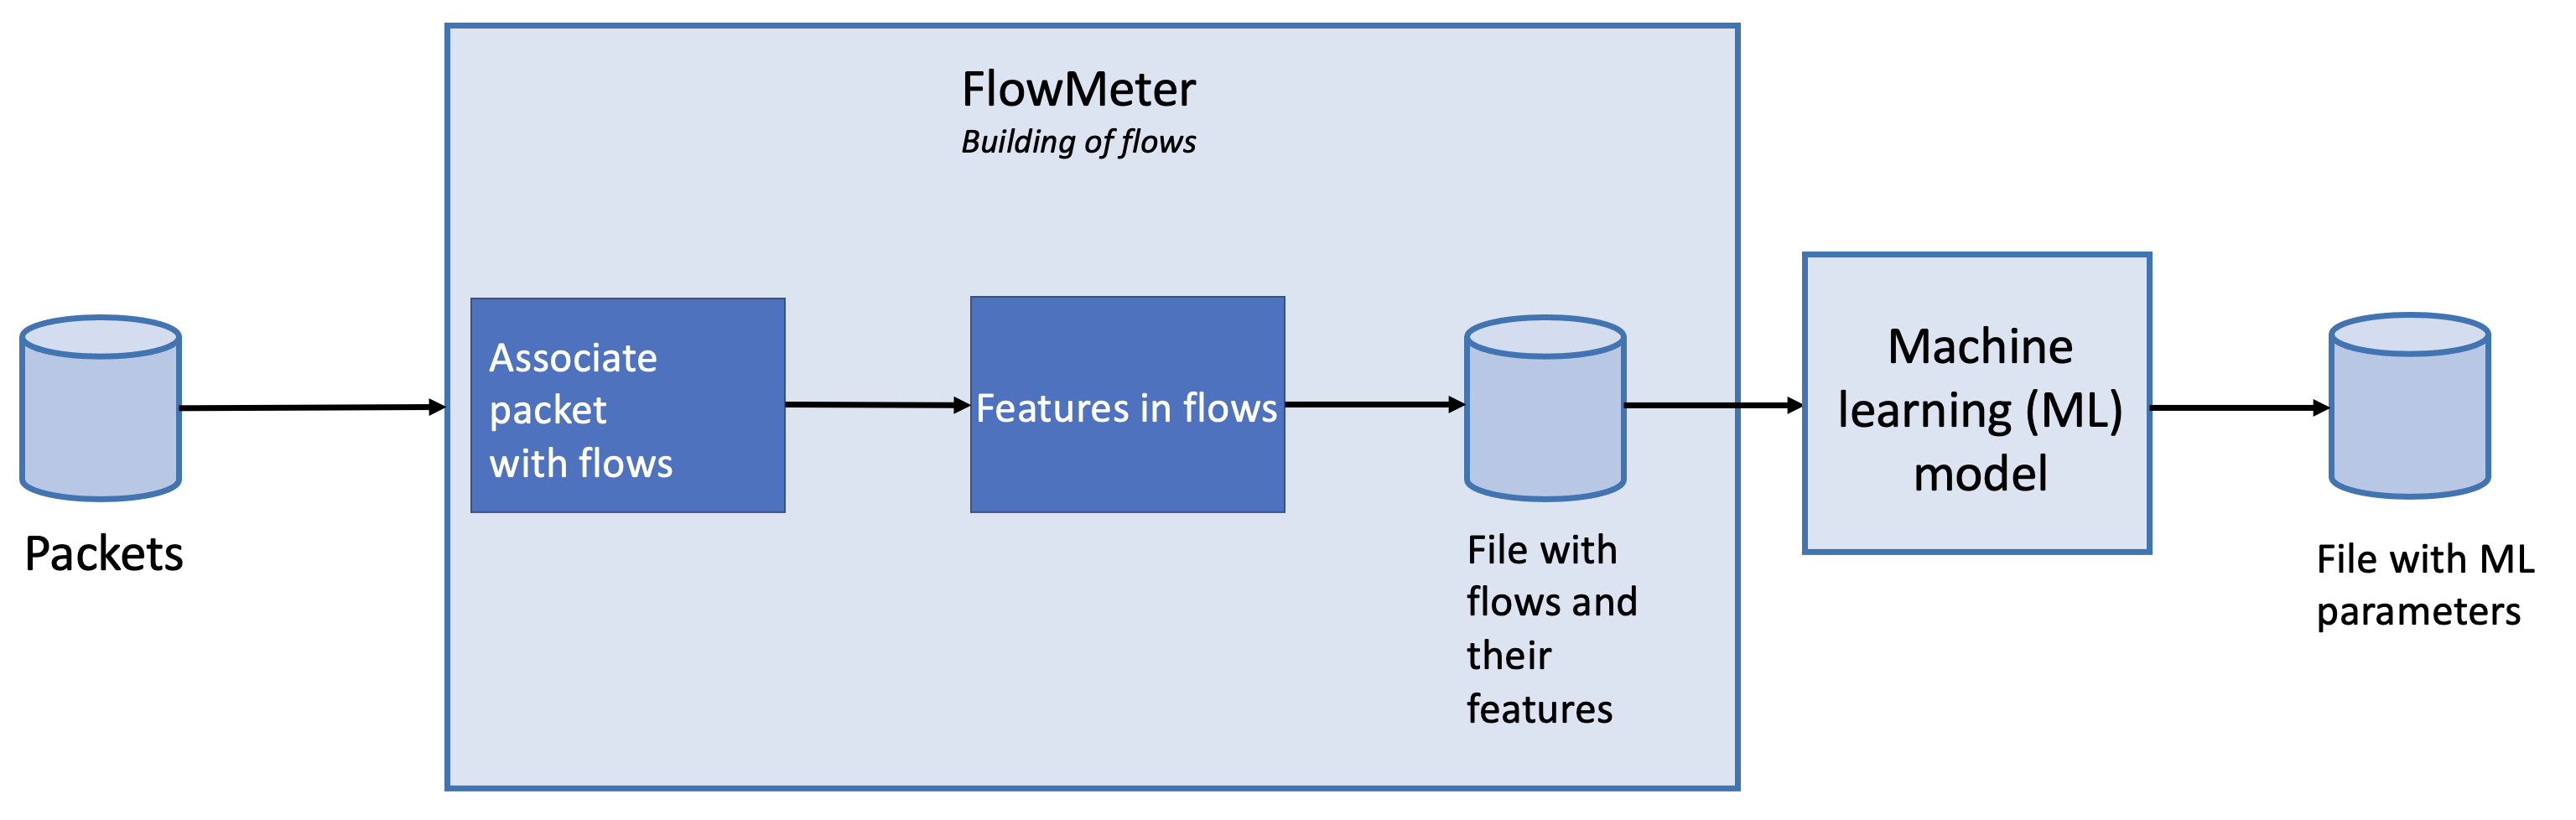 FlowMeter Architecture